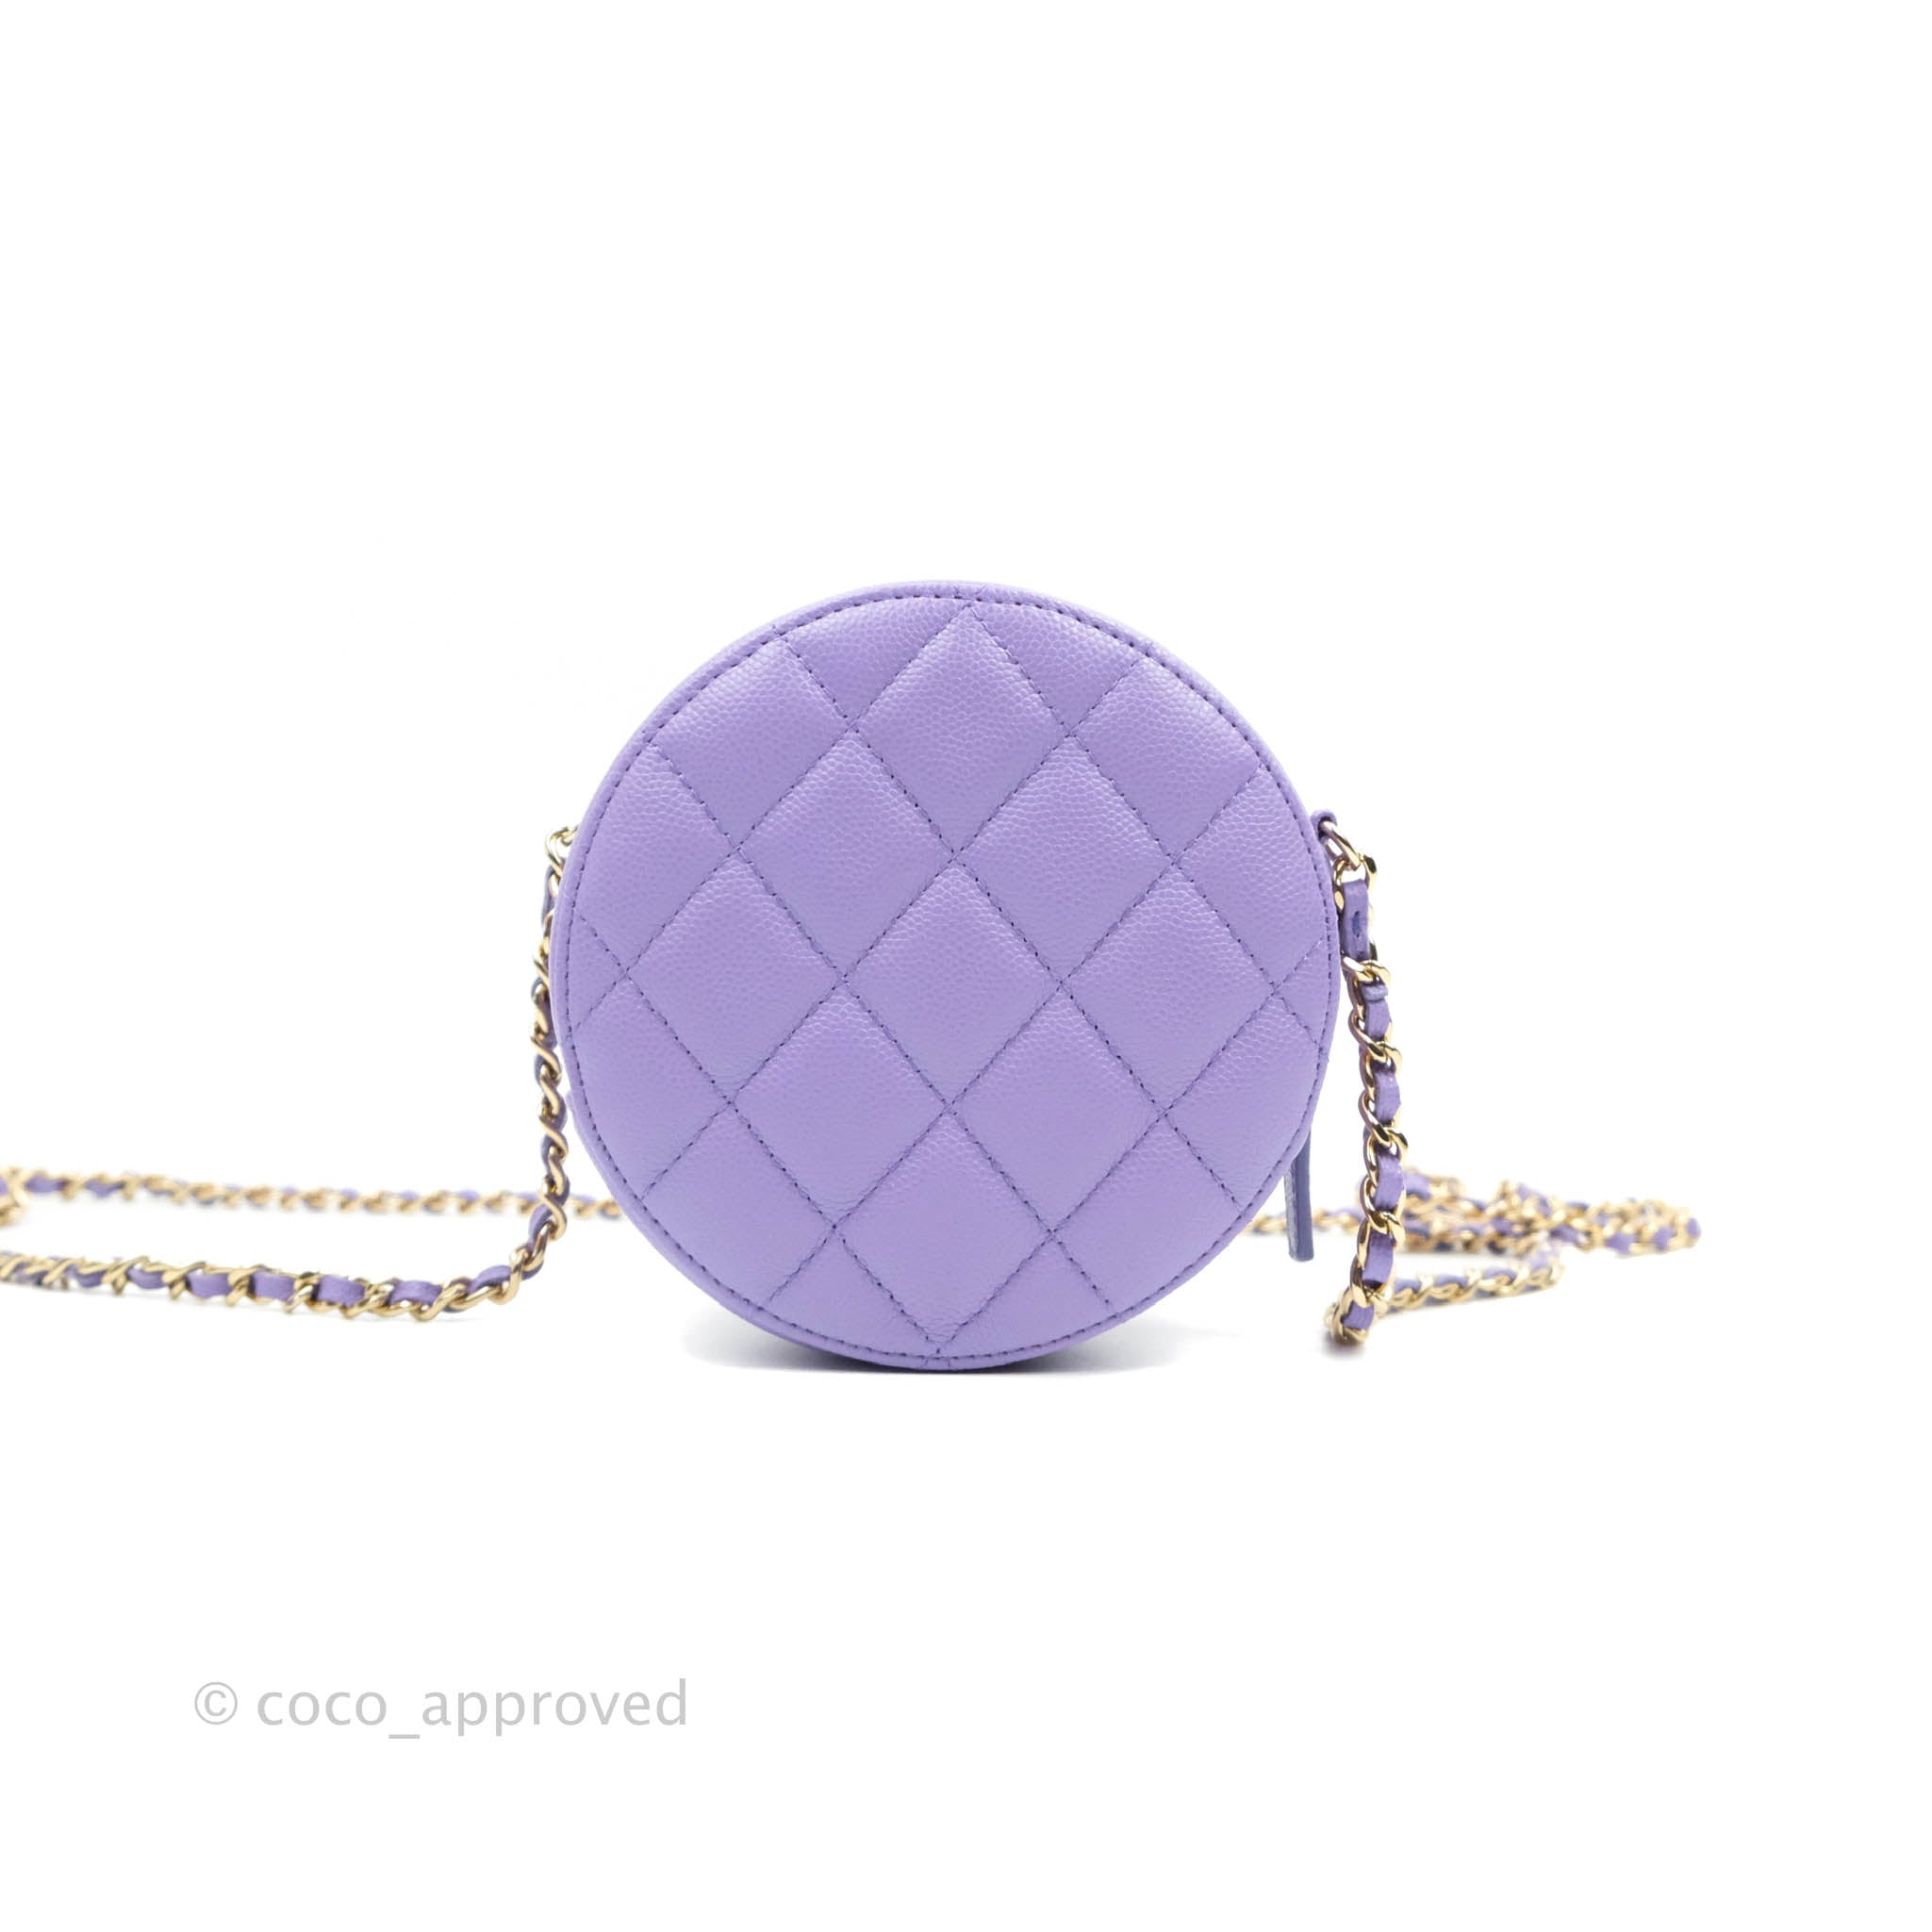 New 22A CHANEL Medium Classic Flap Bag Royal 💜 Purple Caviar 🦄 RARE  Handbag 💜